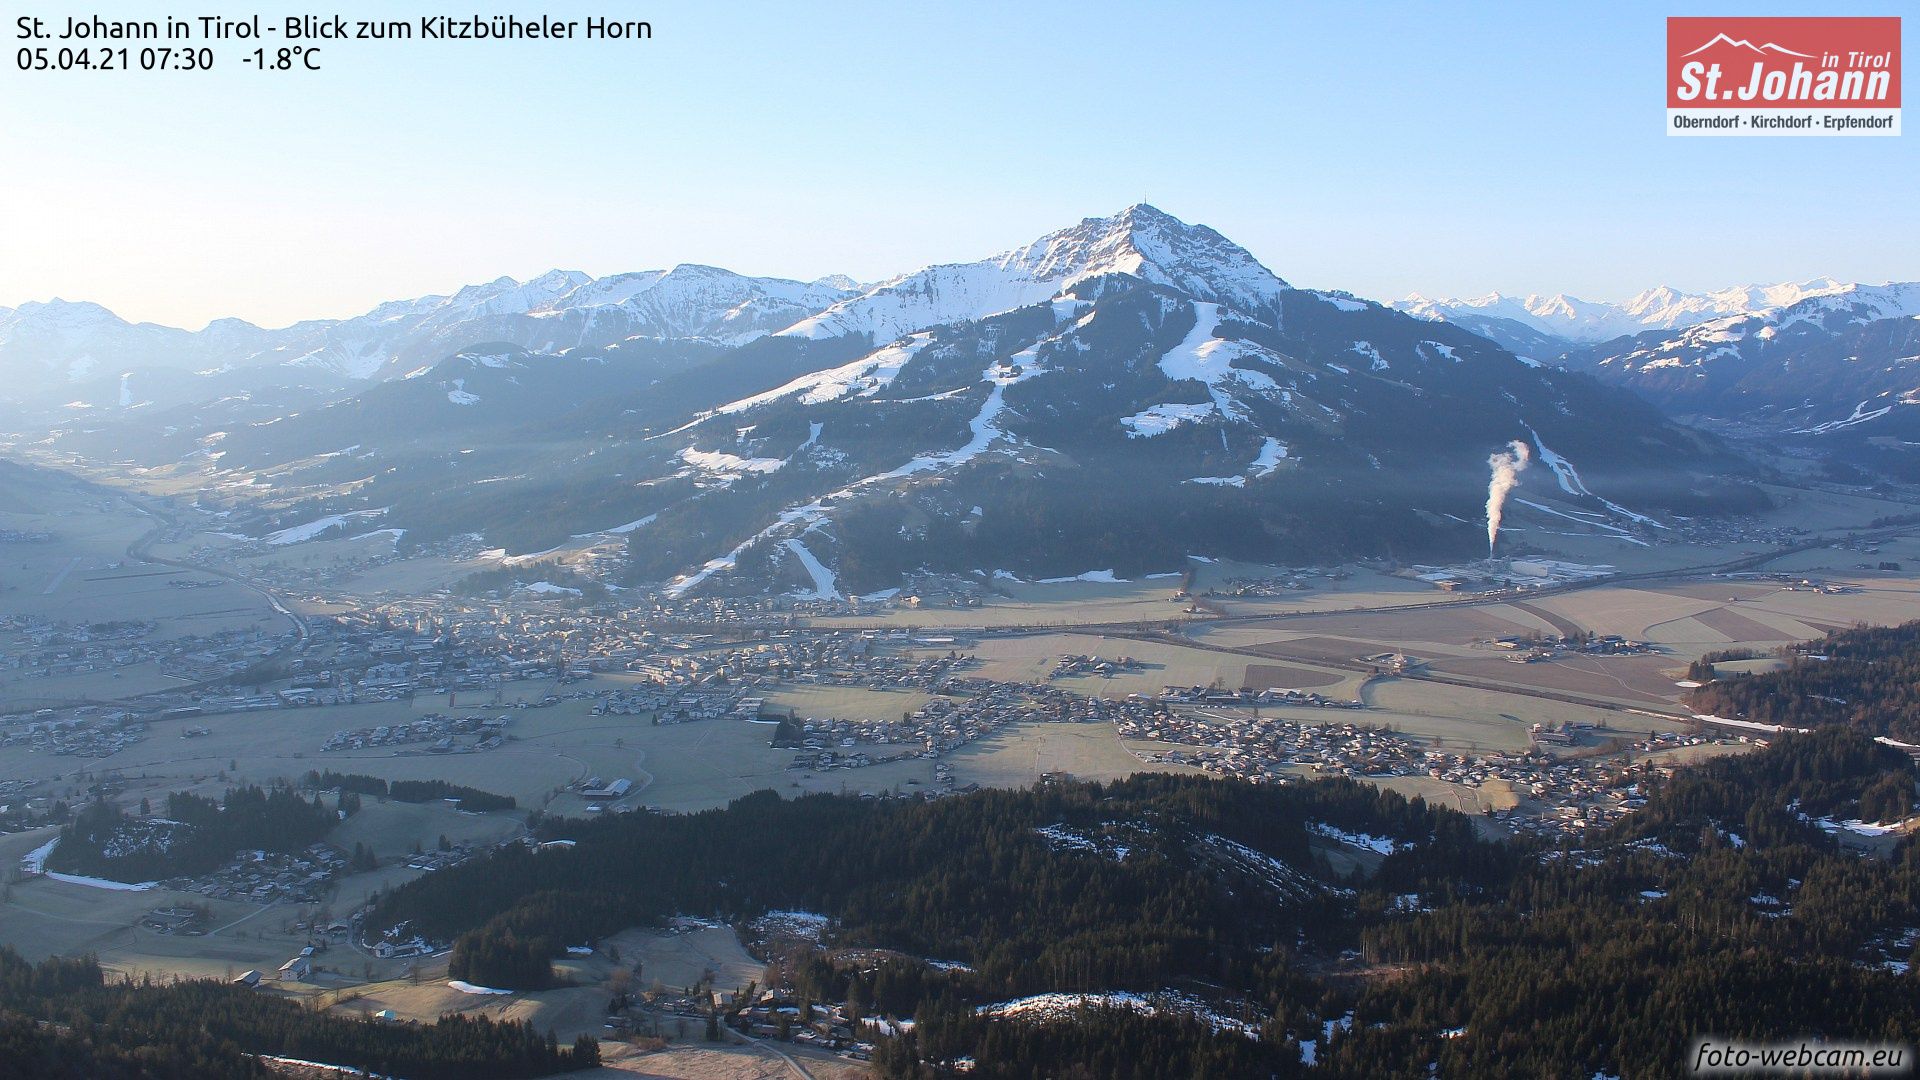 A fresh start of the day in Sankt Johann in Tirol, from tomorrow it will be white again (foto-webcam.eu)